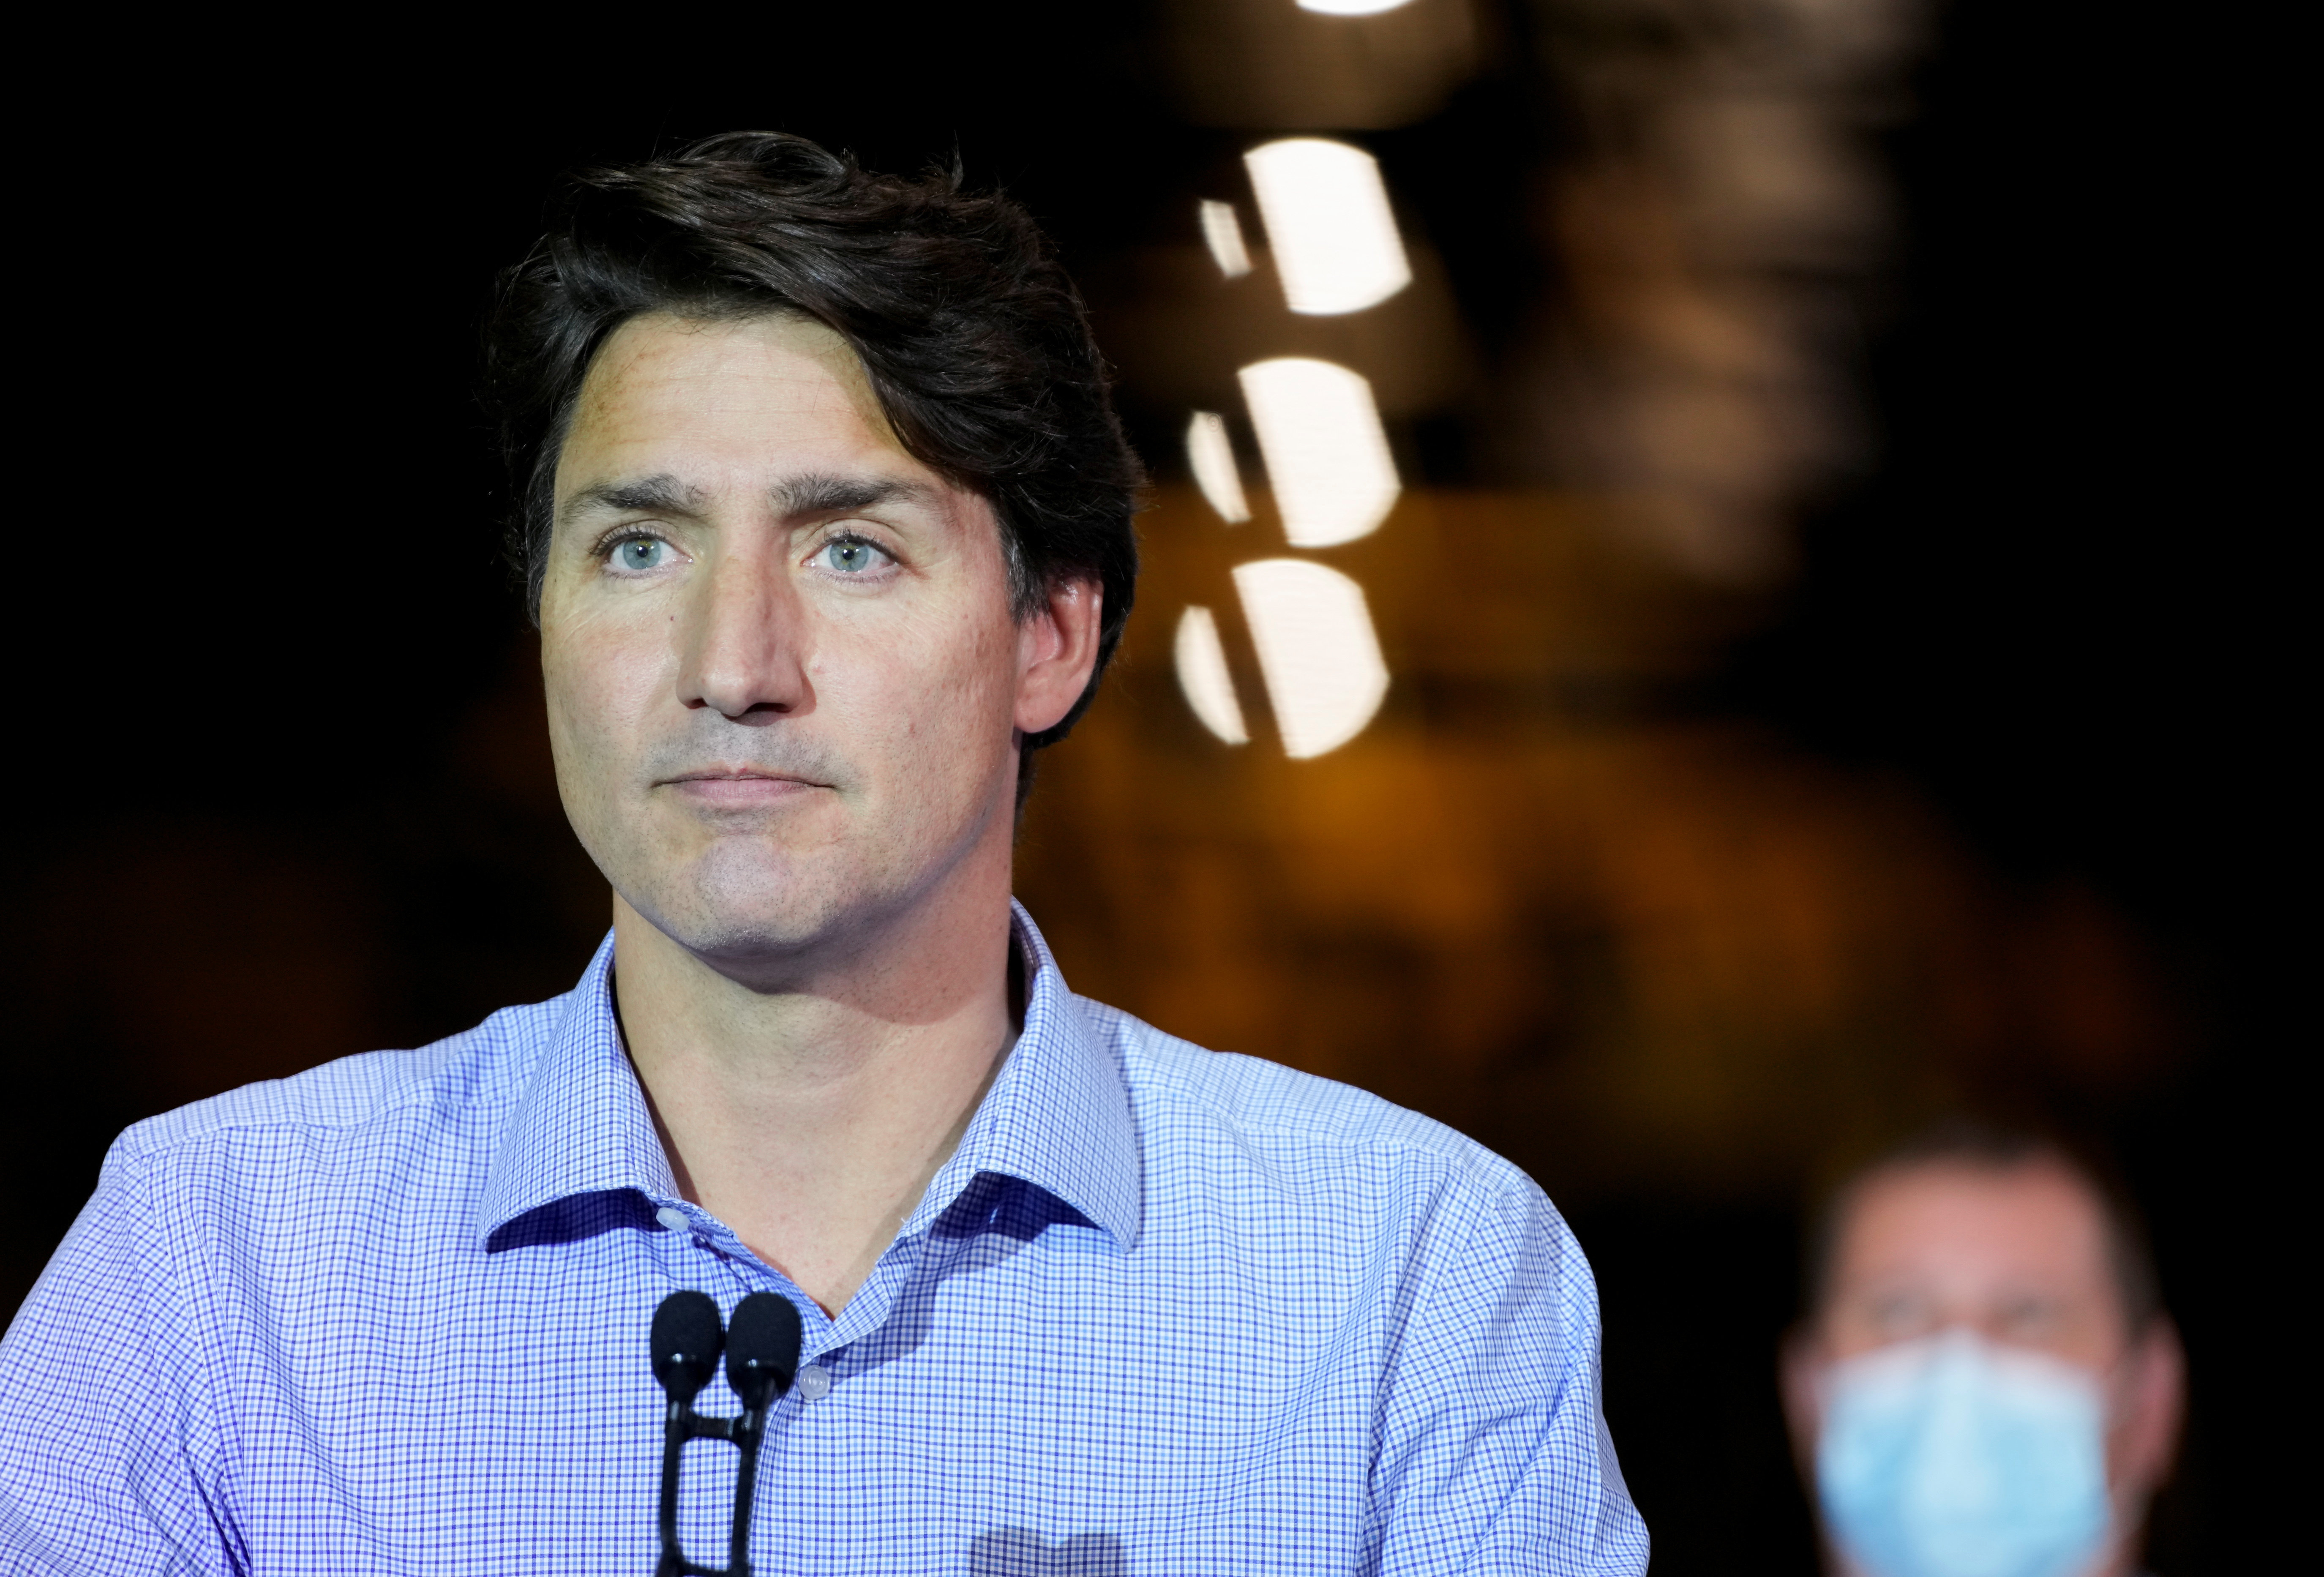 Canada's Liberal Prime Minister Justin Trudeau campaigns in Welland